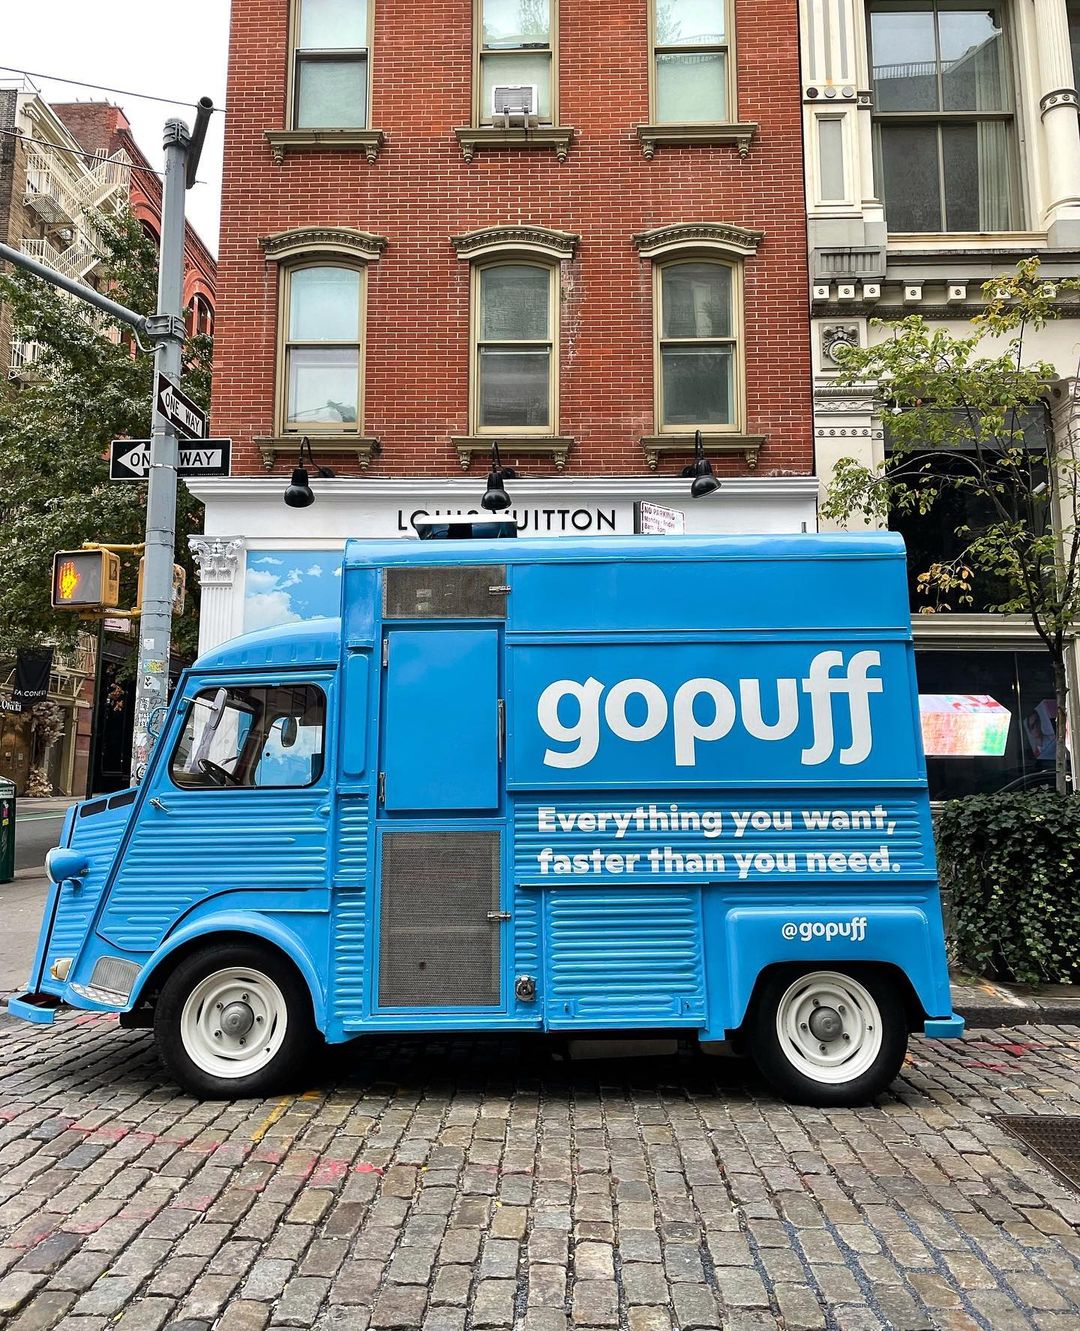 Gopuff branded Citroen food truck